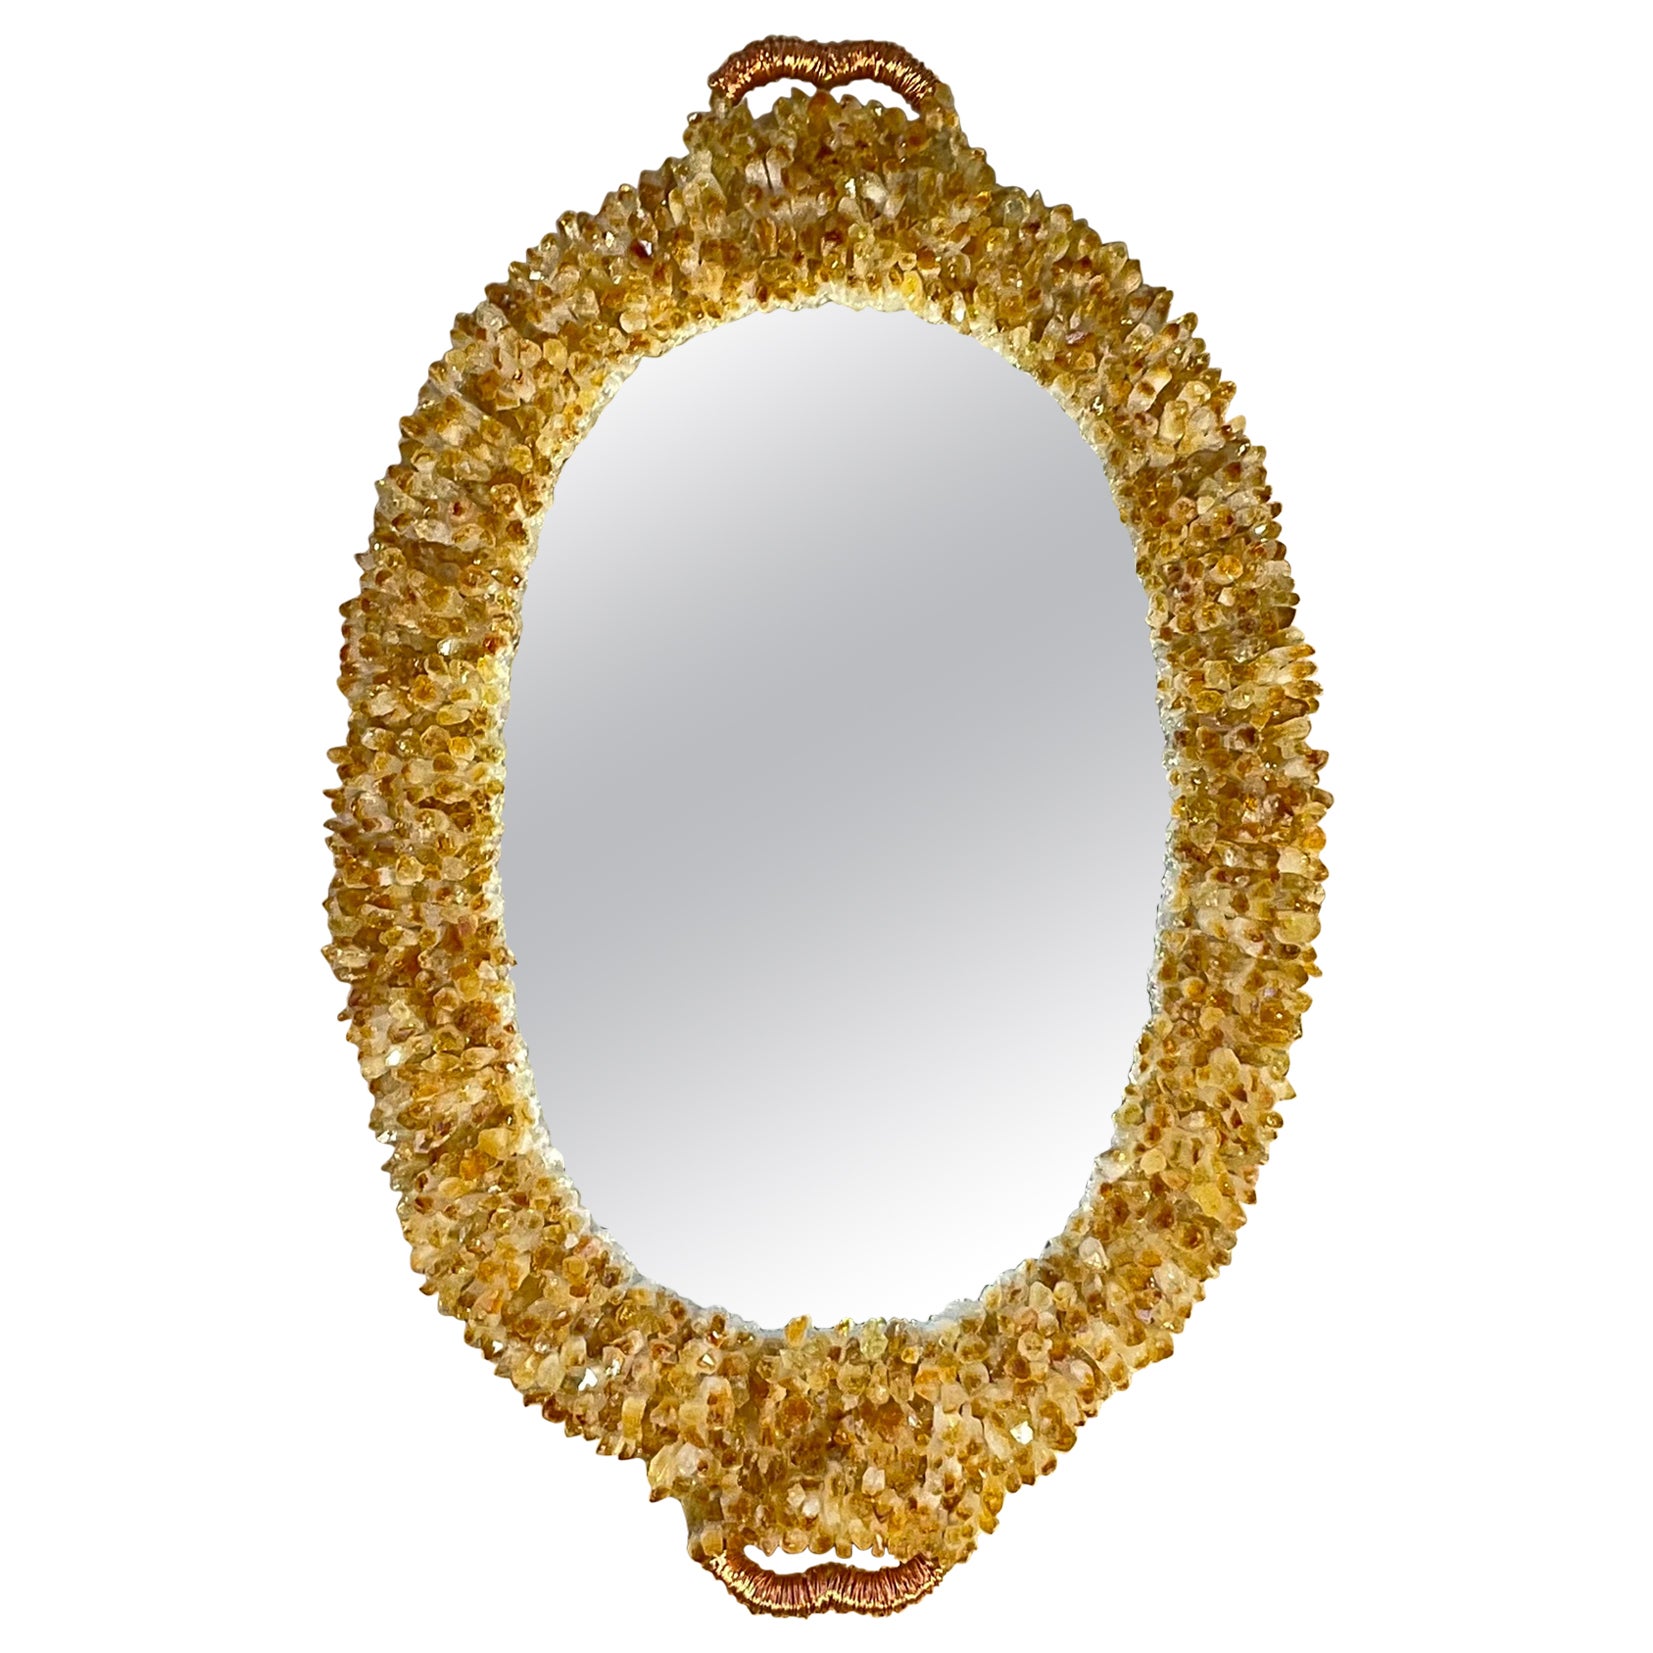 One of a Kind Oval Citrine Crystal Quartz Wall Mirror